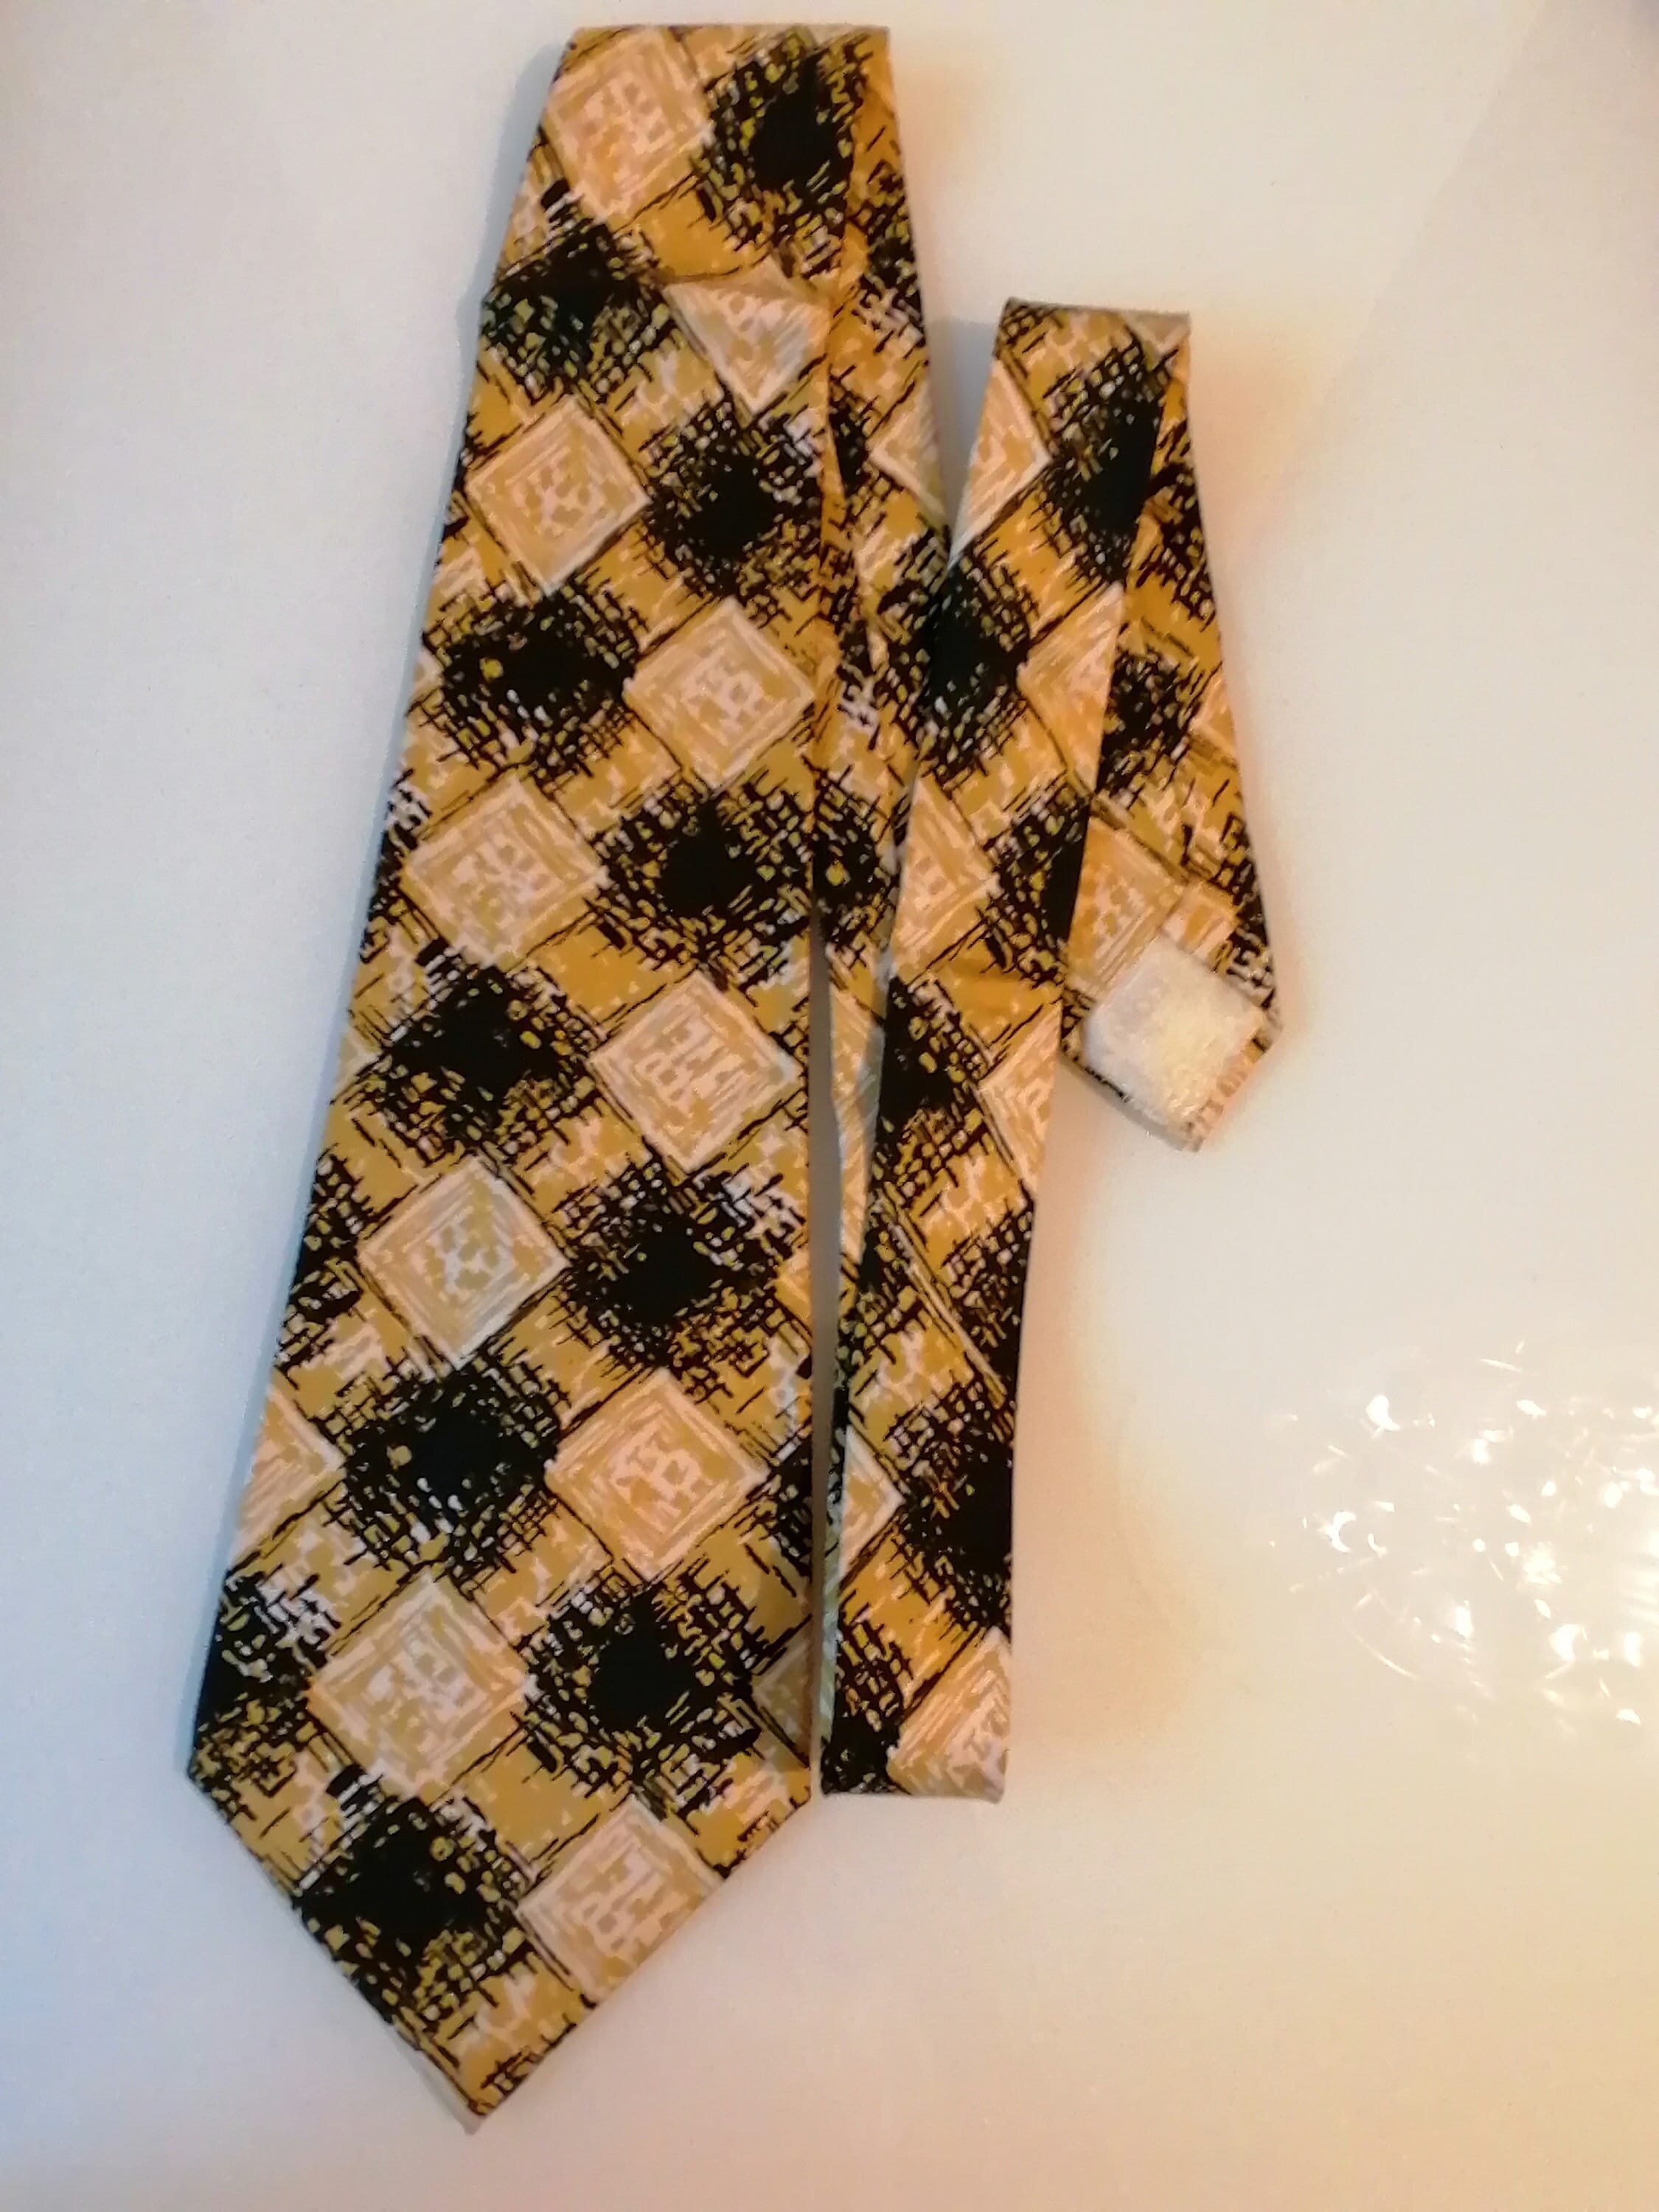 Vintage Louis Vuitton Krawatte aus 100 % reiner Seide dunkelbraun kariert